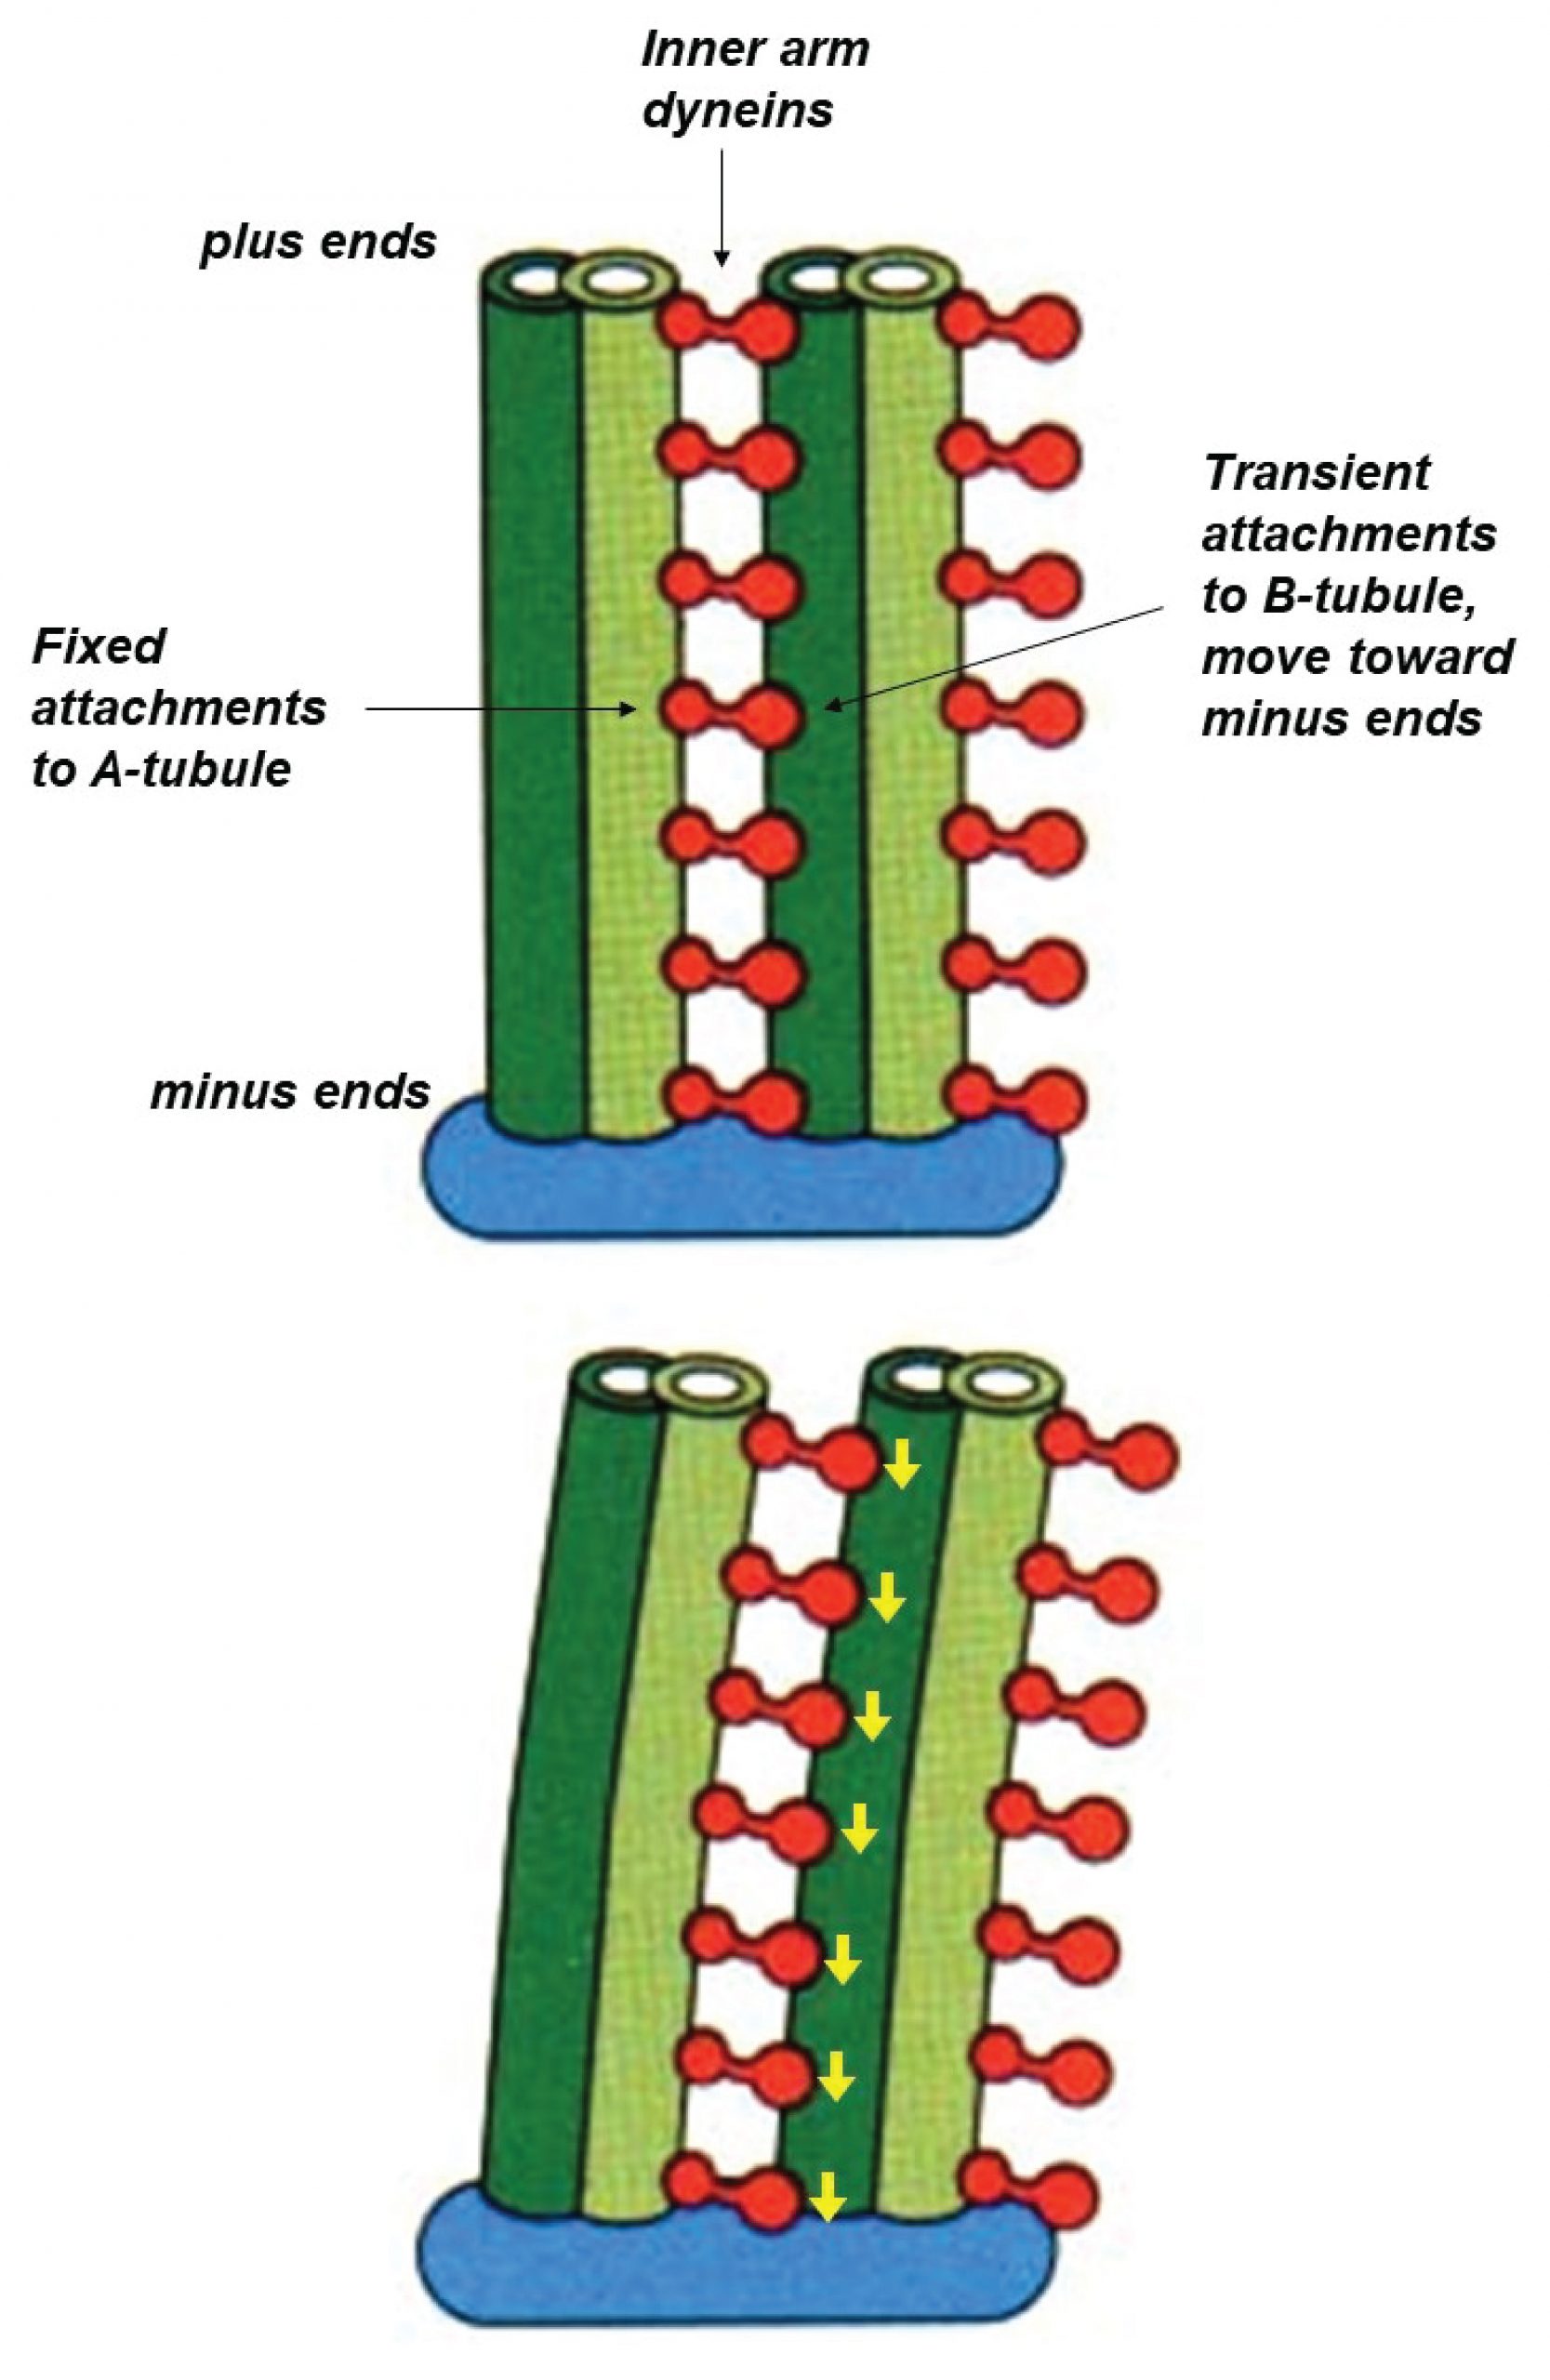 How dynein drives axoneme bending